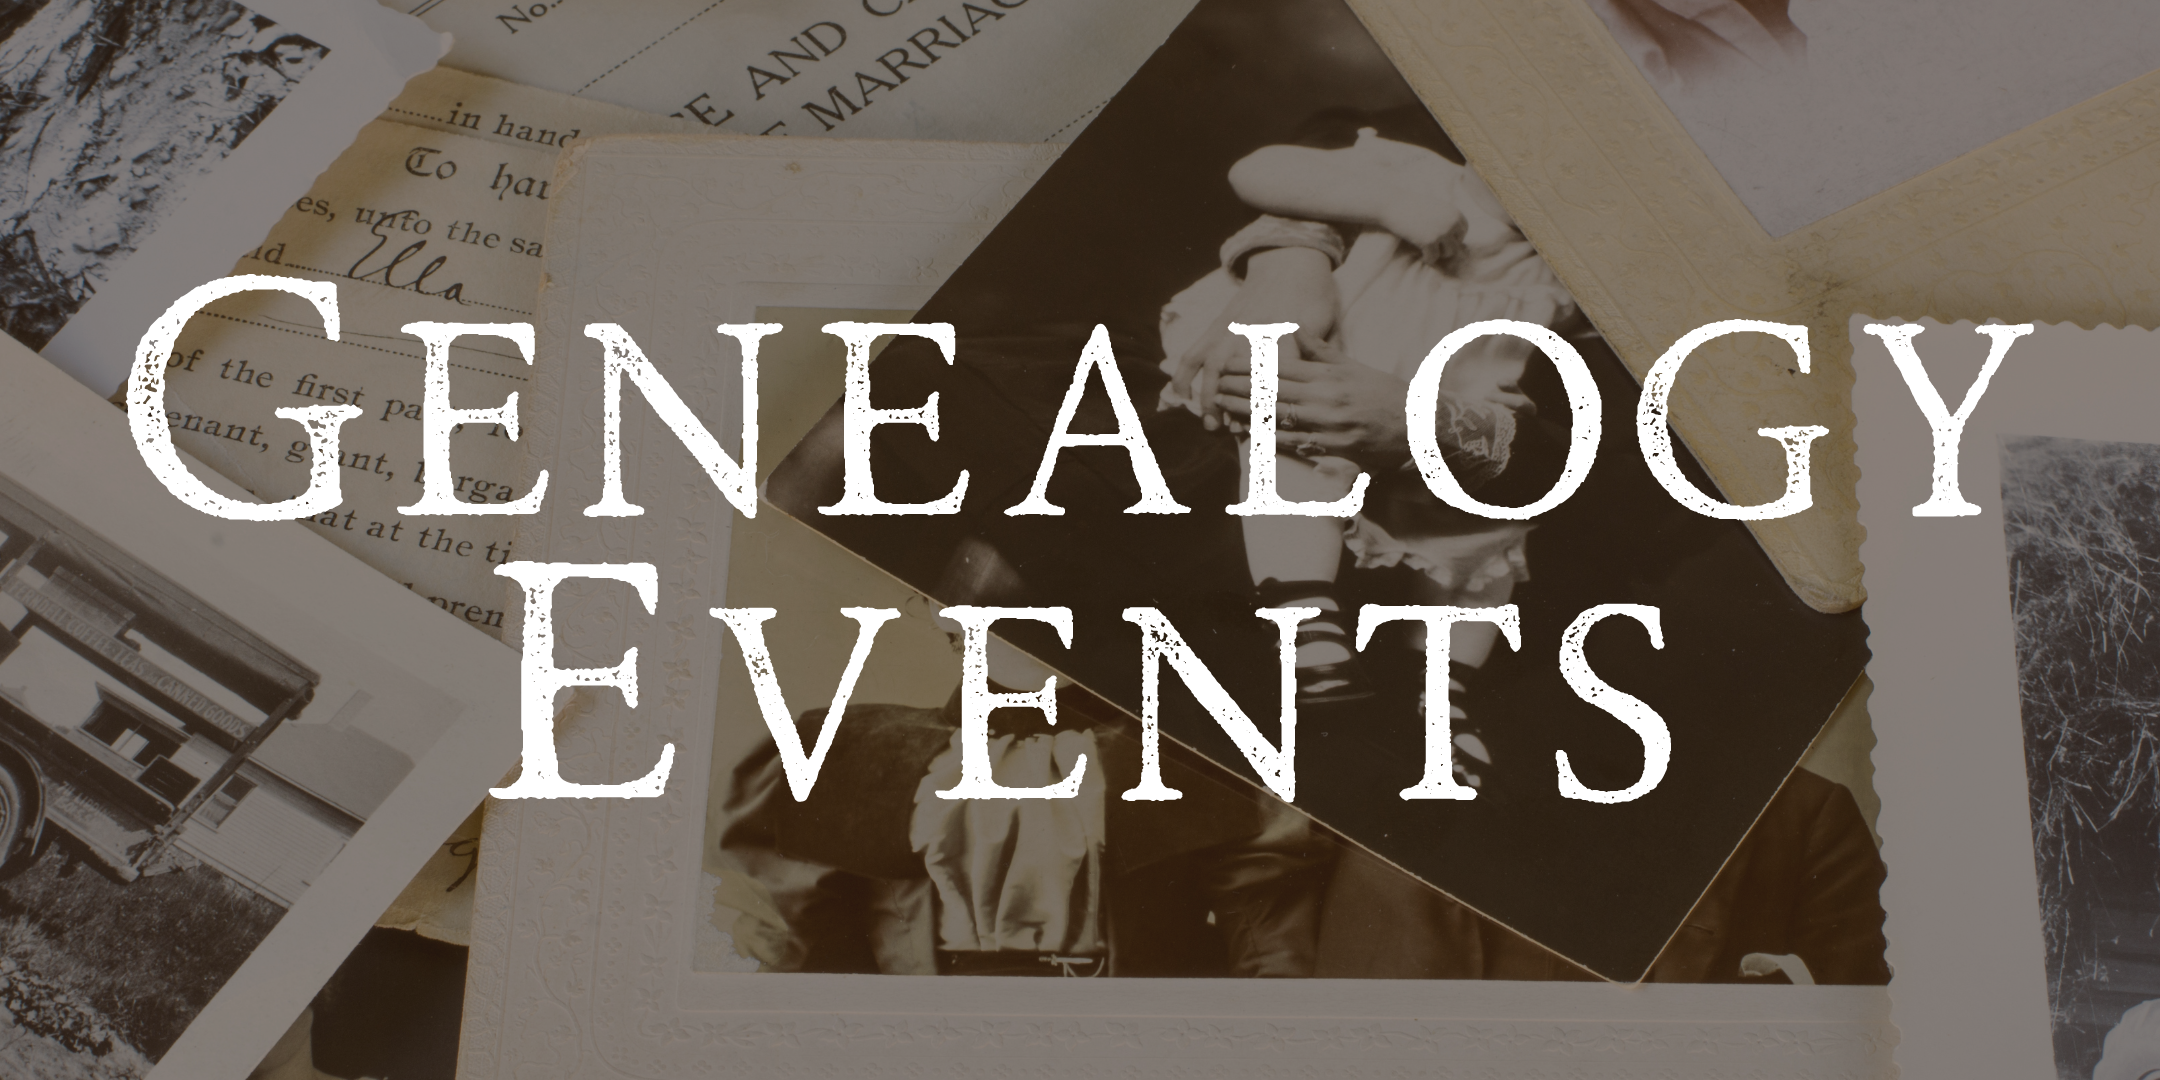 image of "Genealogy events"